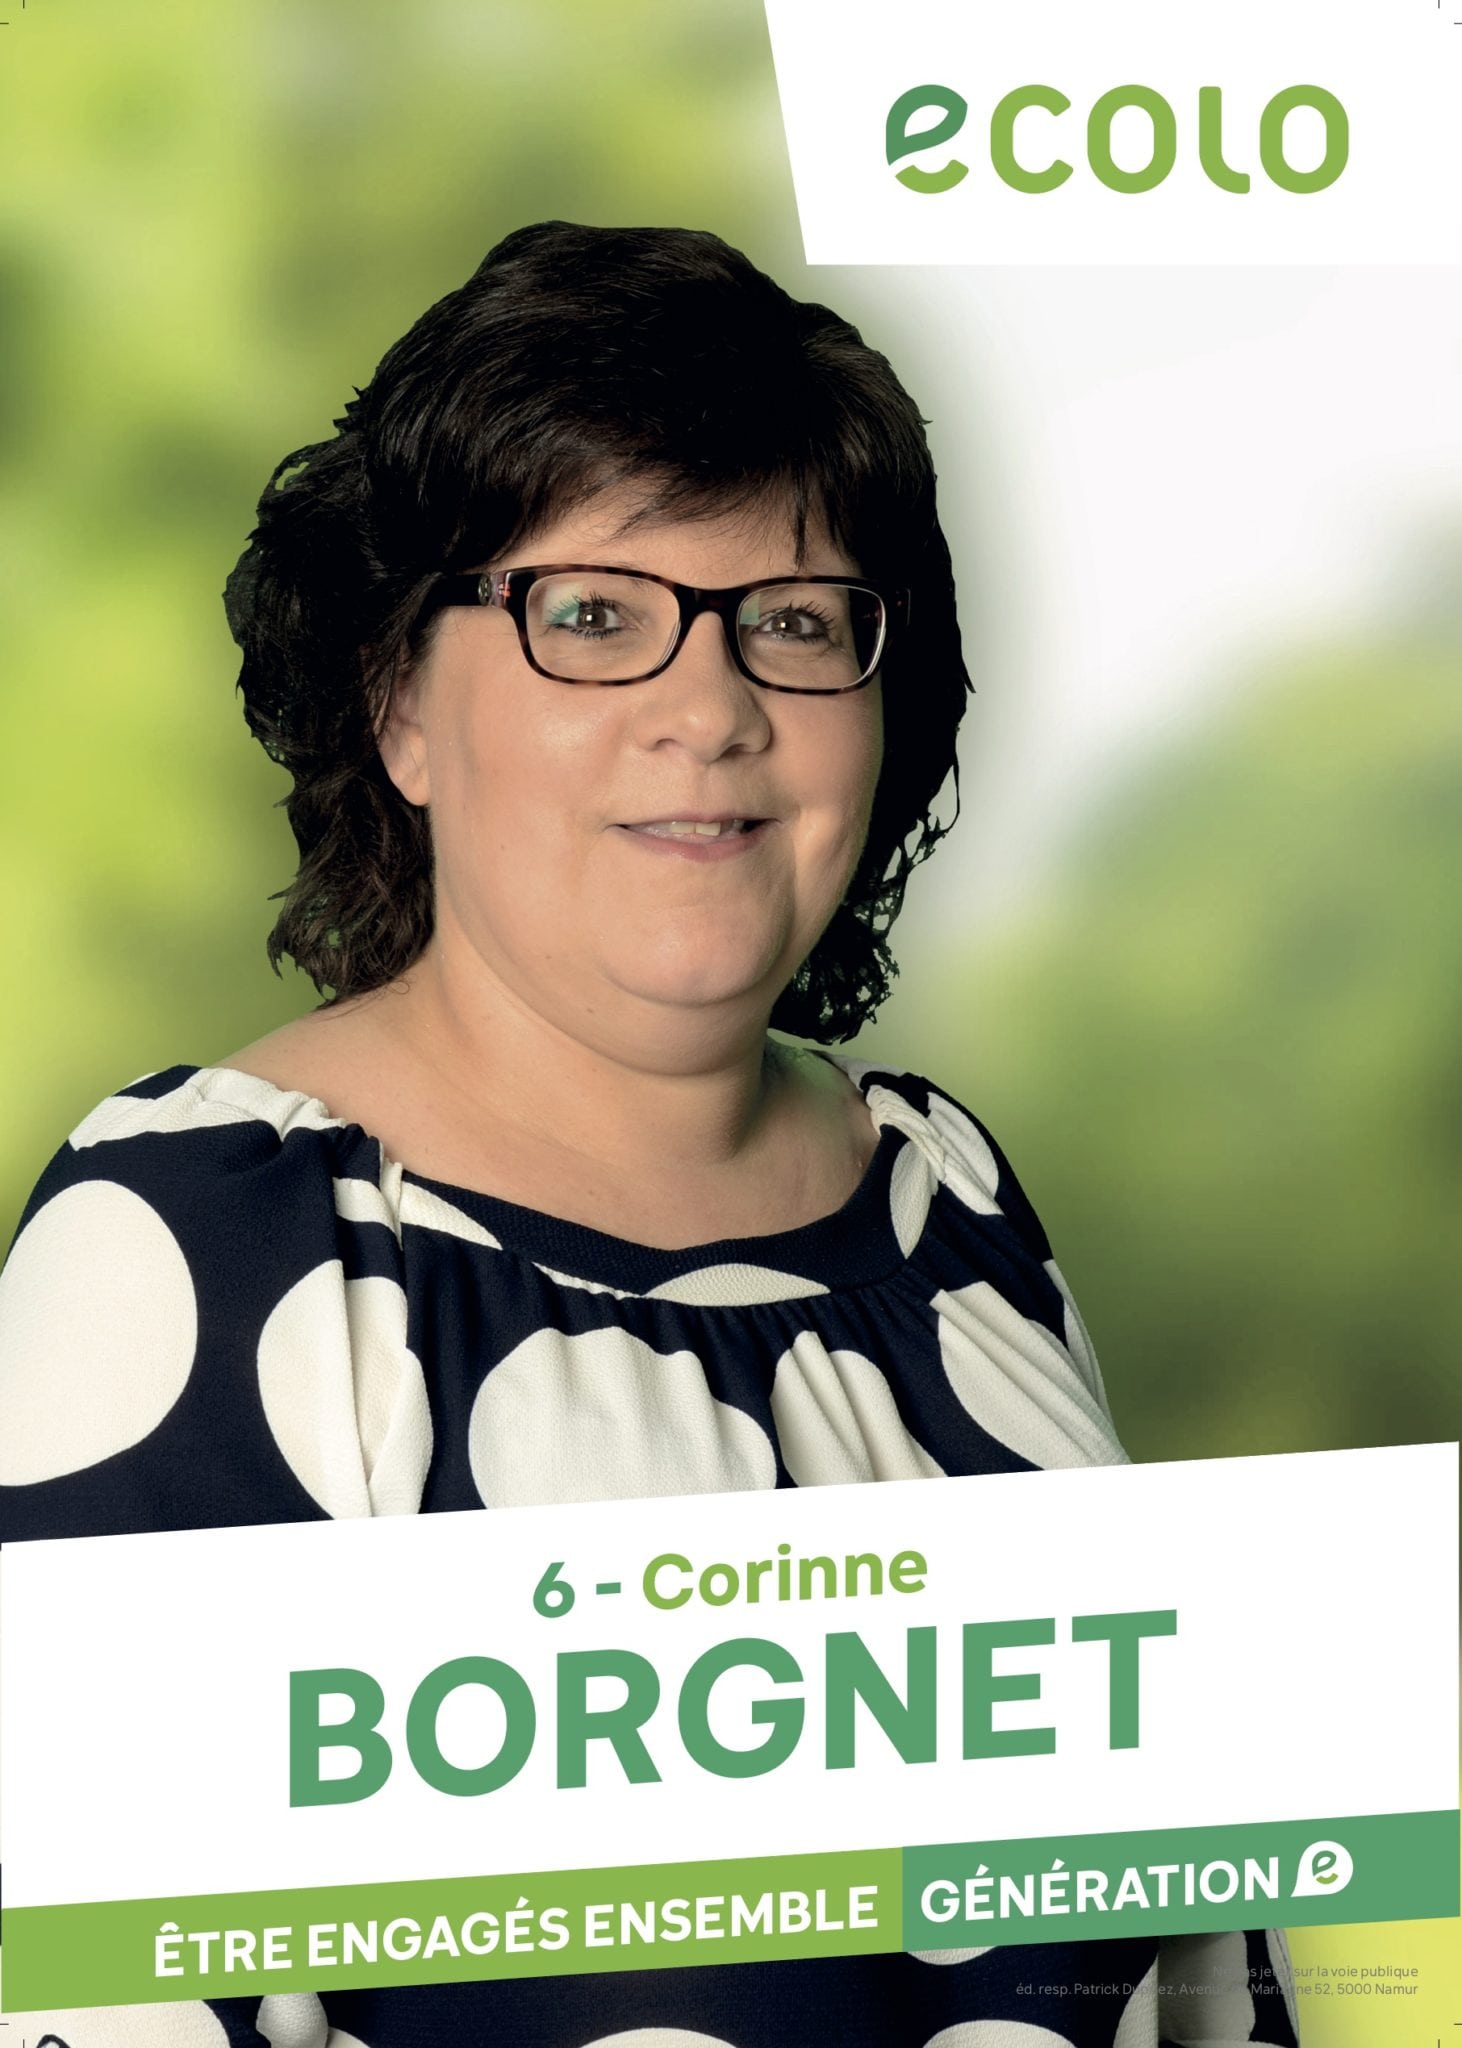 Corinne Borgnet